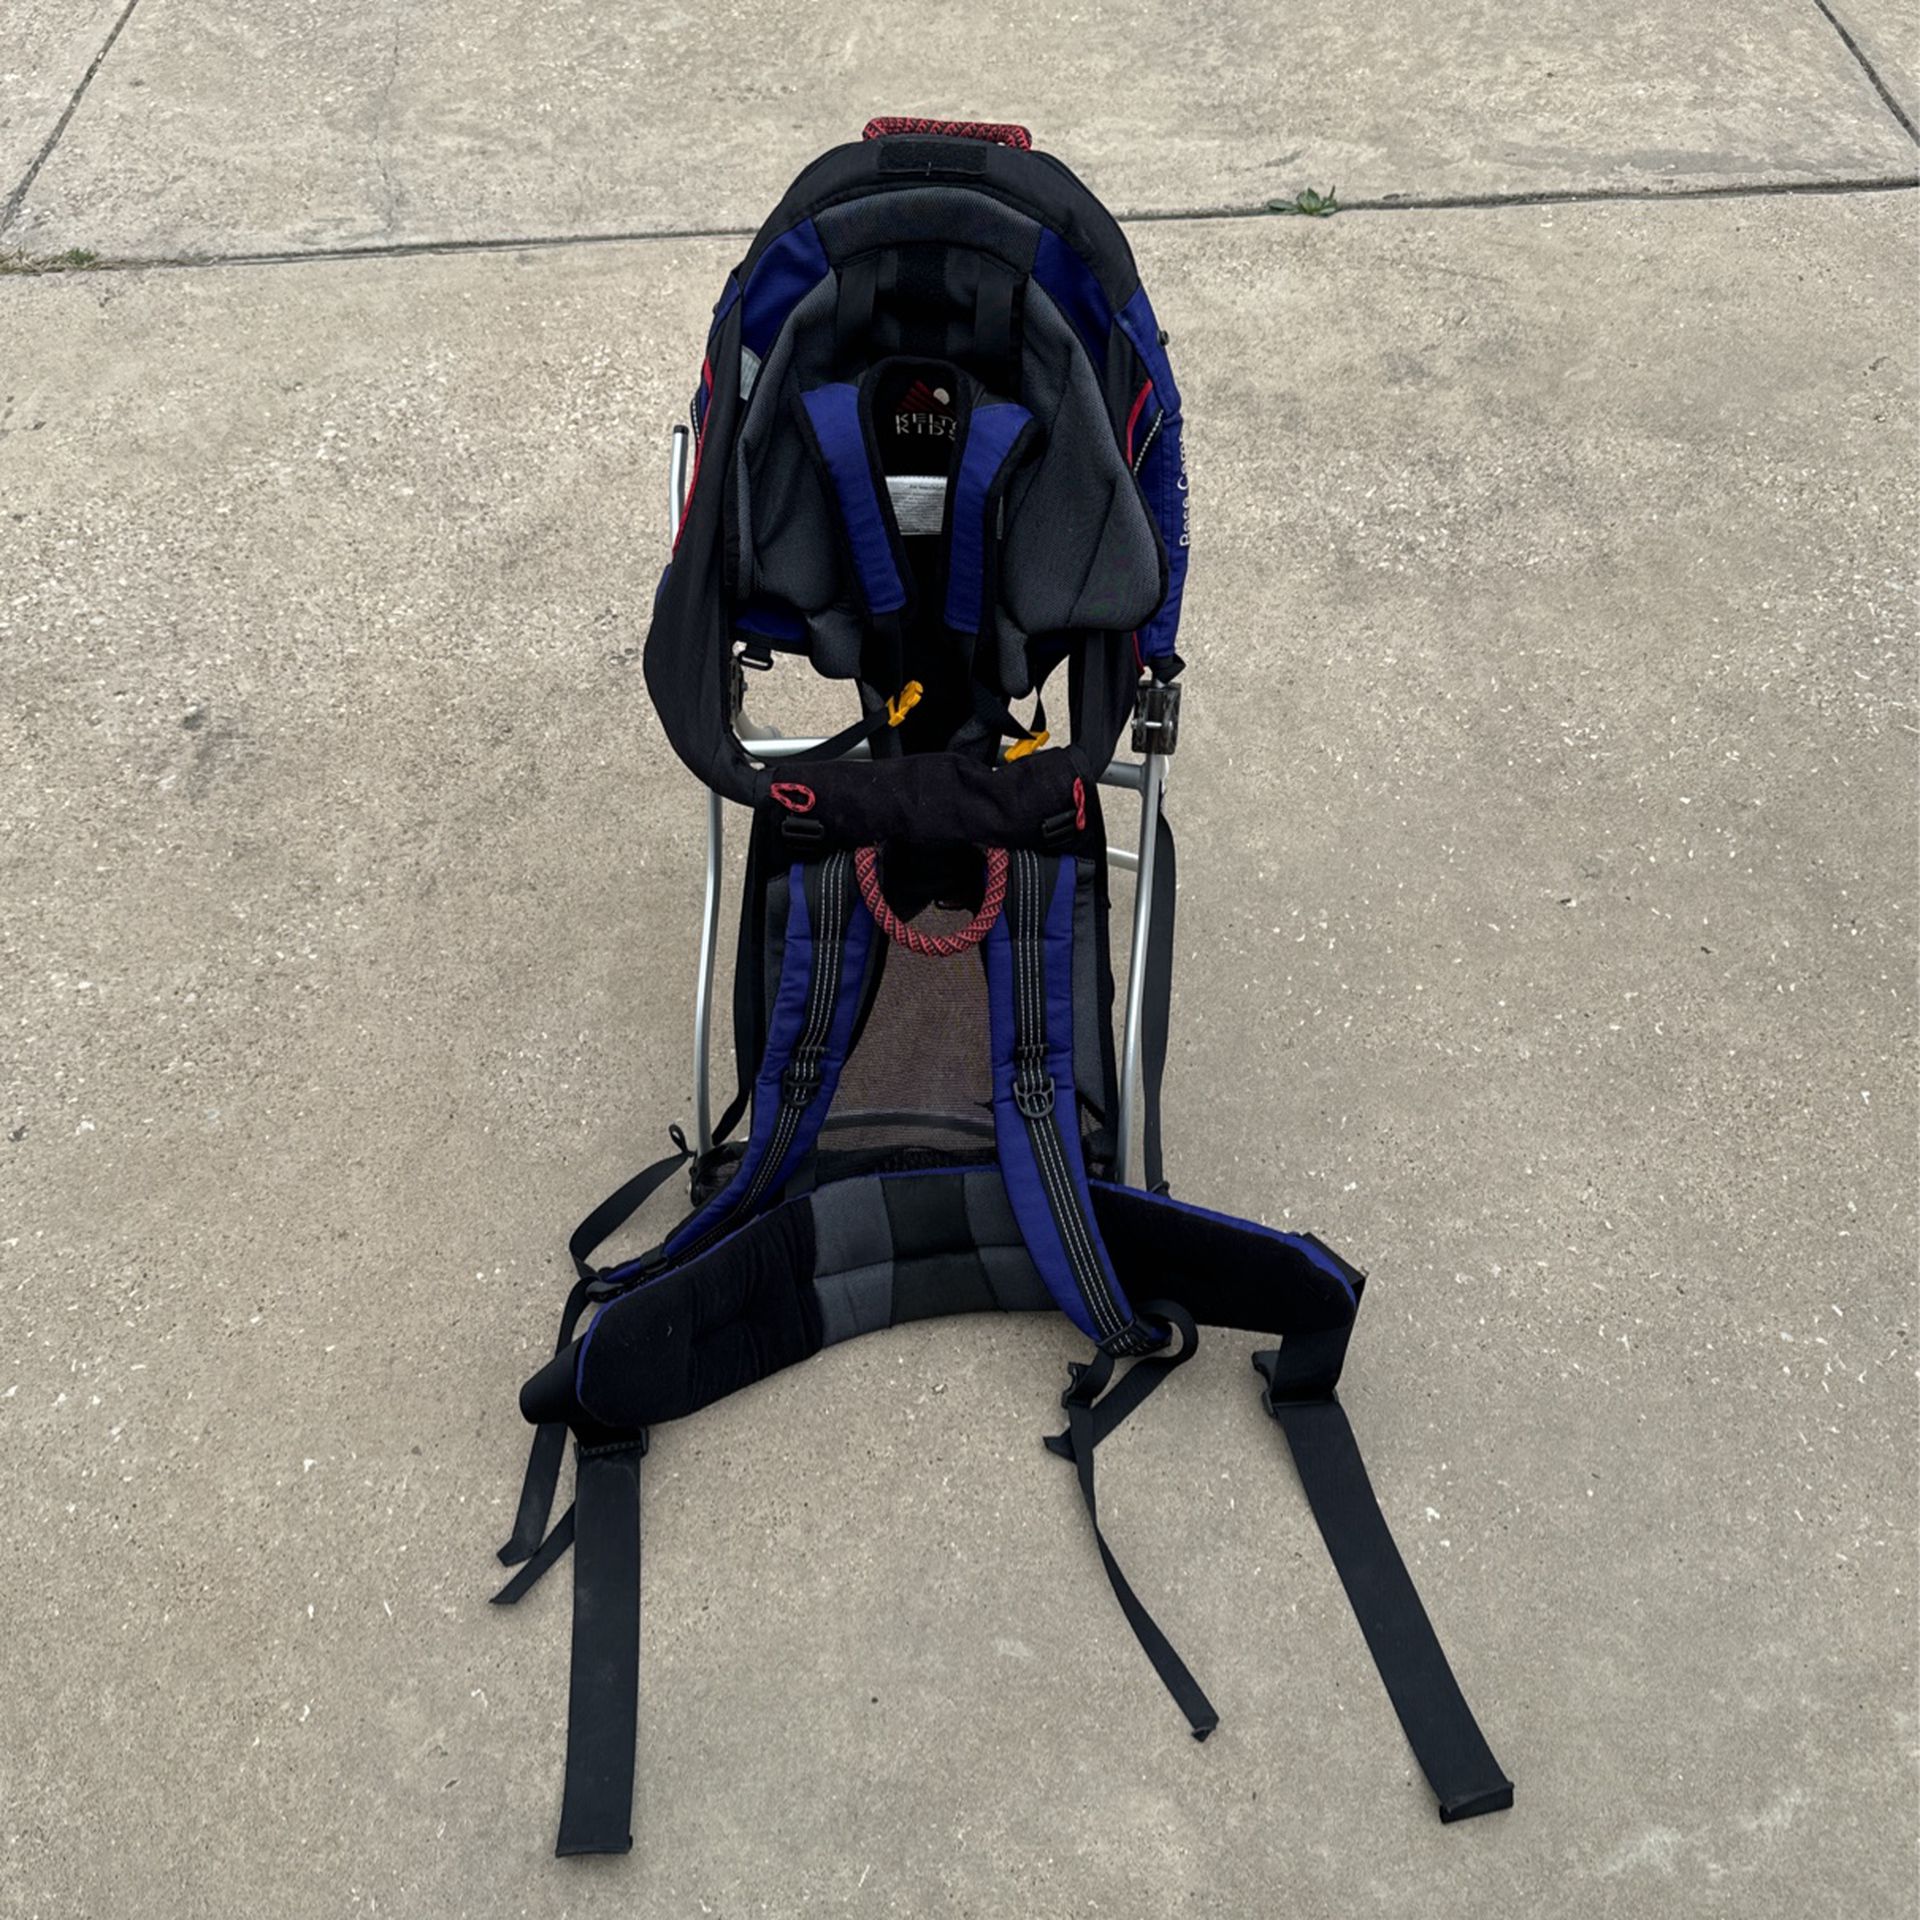            Kelty Kids Ridgeline Backpack Carrier, Baby Toddler Outdoor Hiking